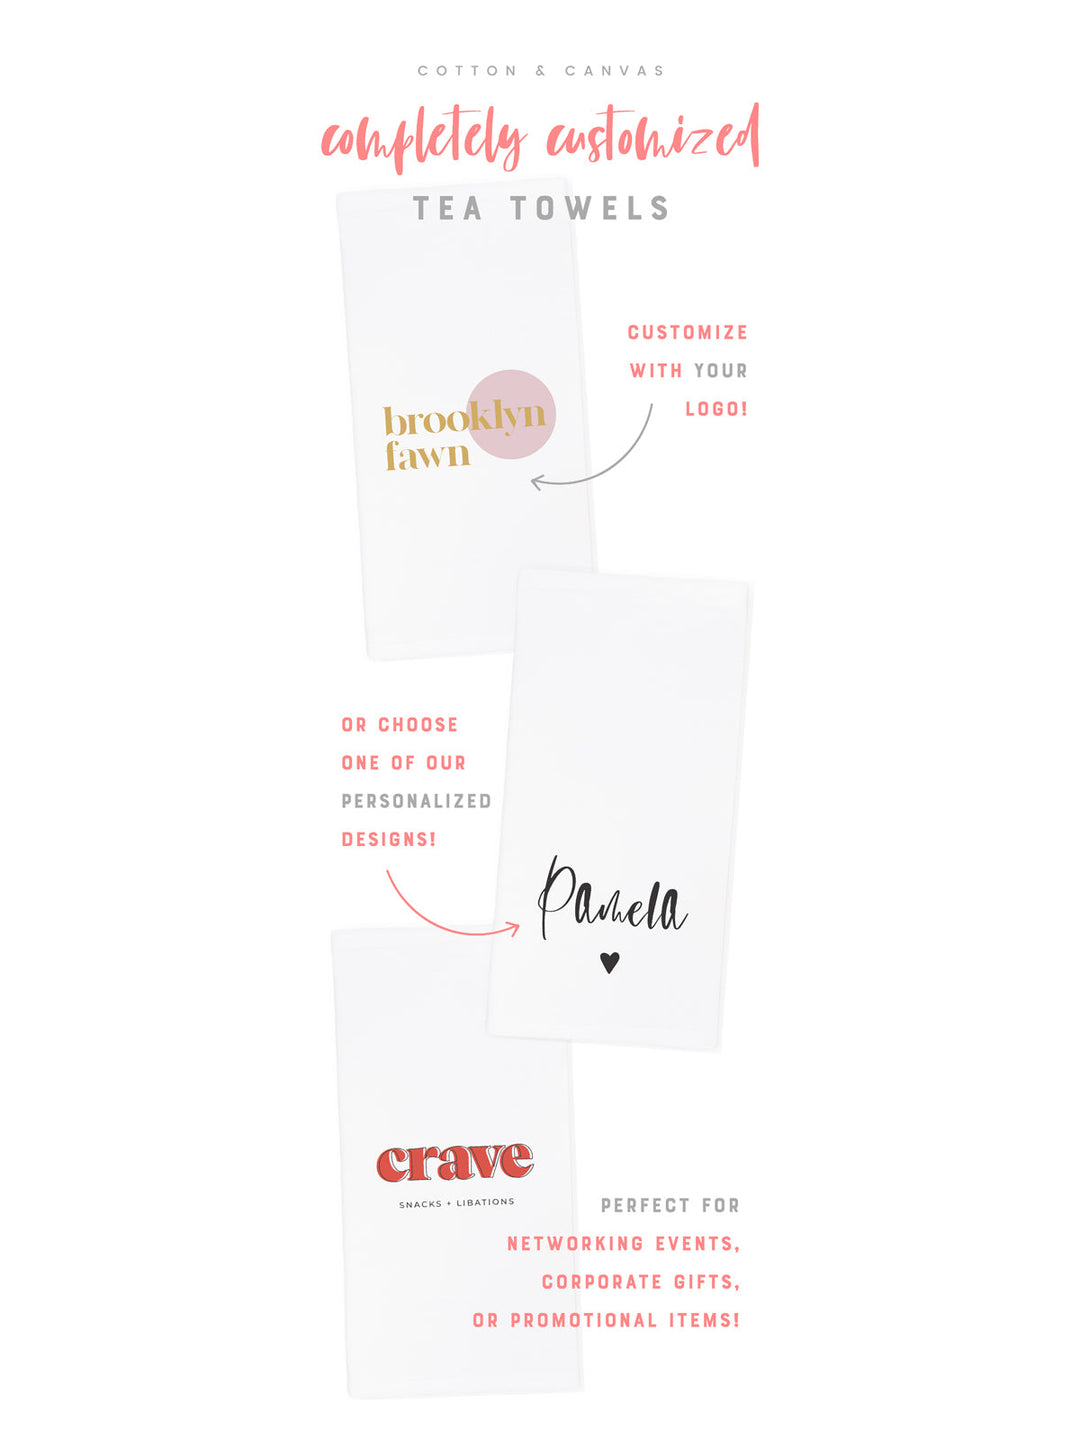 Custom Tea Towel by The Cotton & Canvas Co.